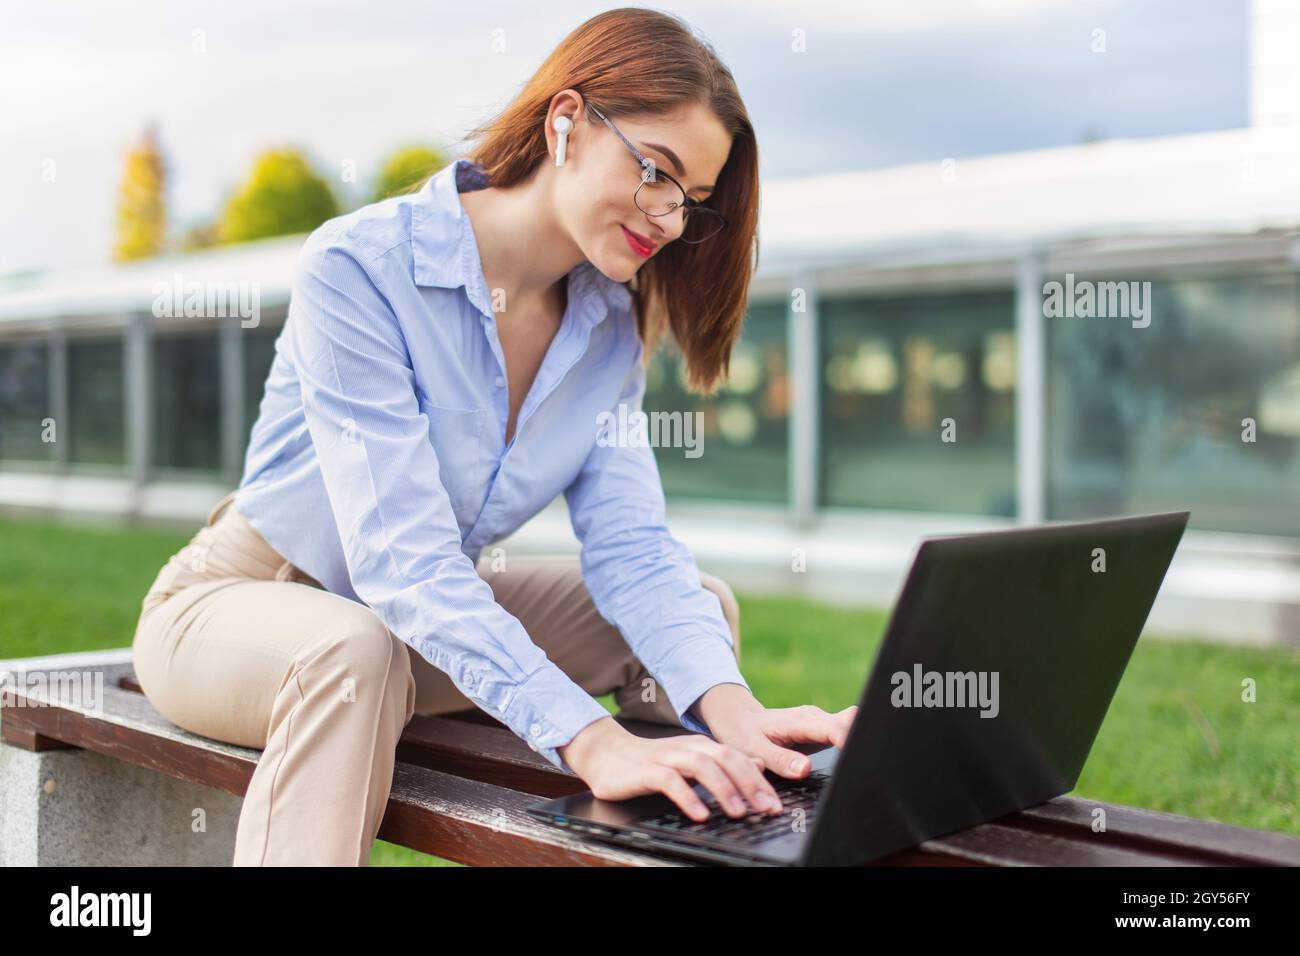 Young university student entrepreneur Caucasian woman using laptop in park, wireless communication Stock Photo